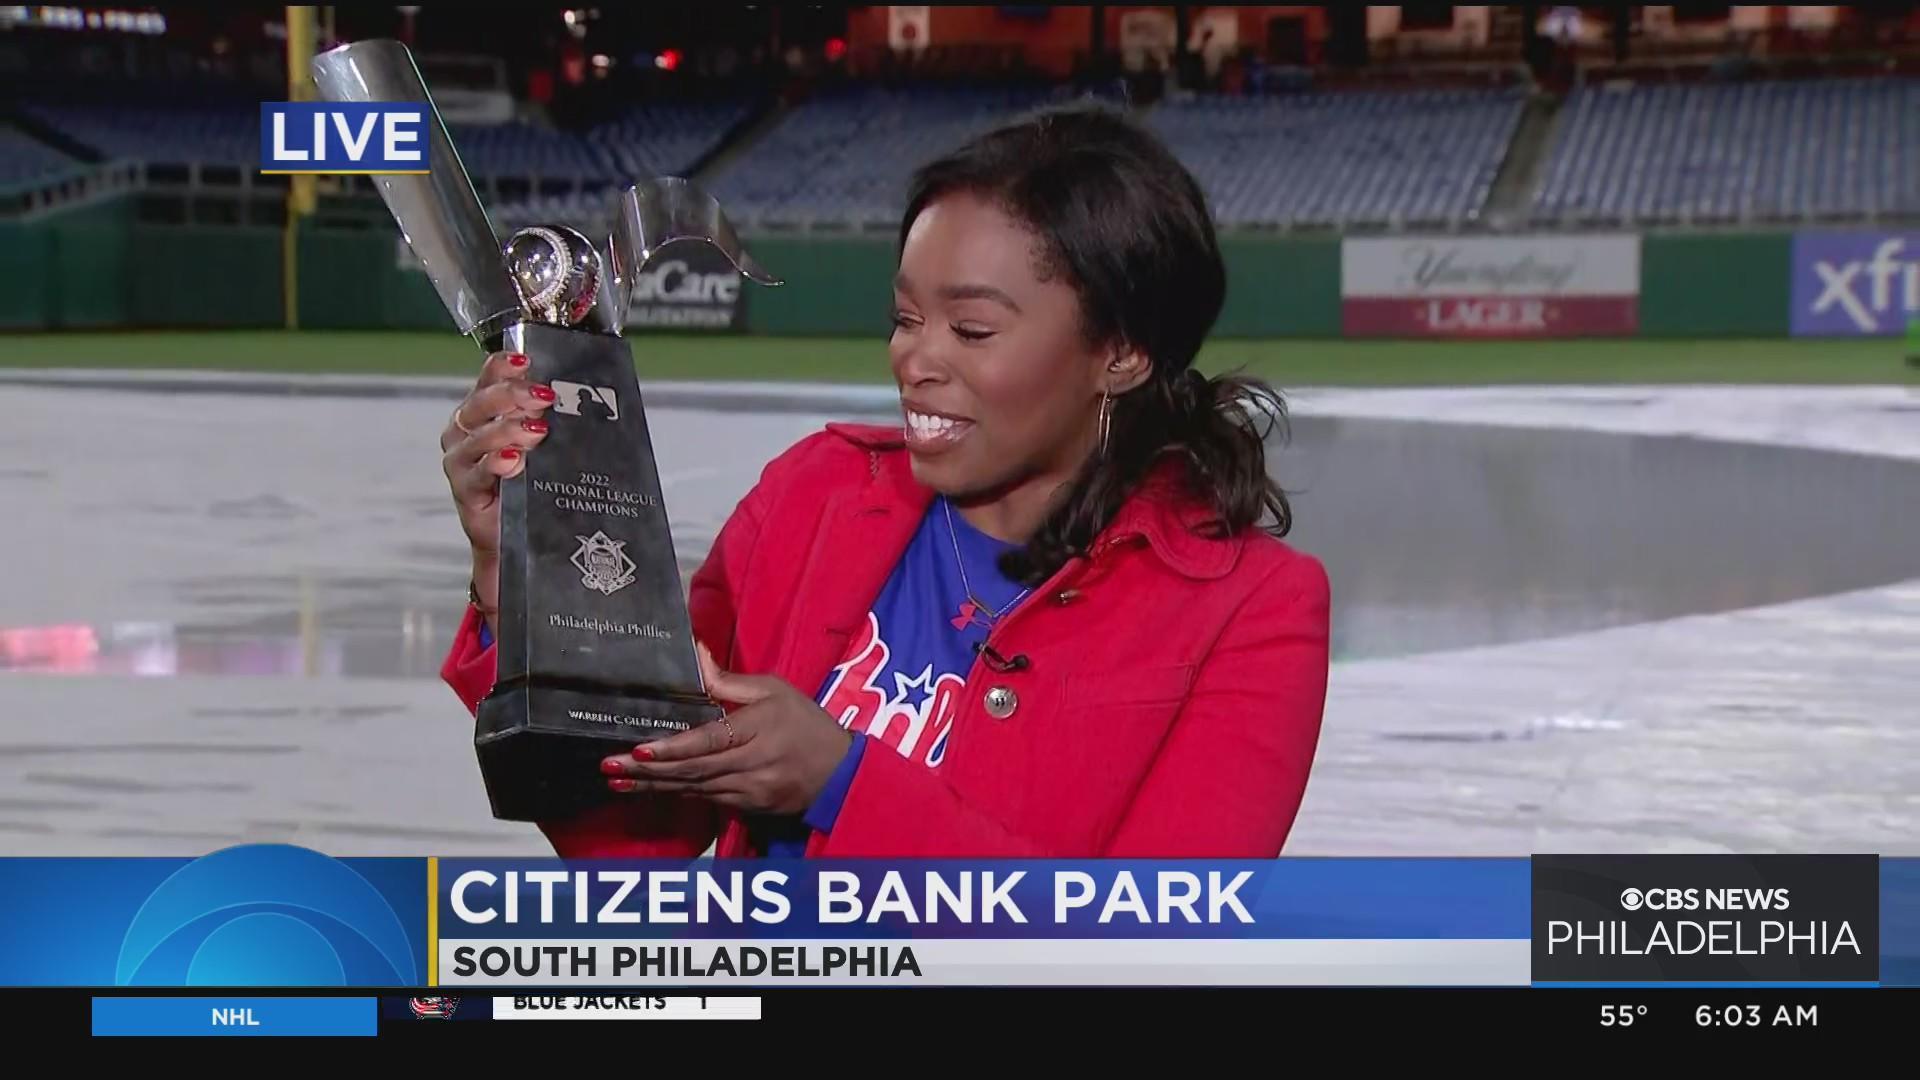 Philadelphia Phillies showing off National League champions trophy